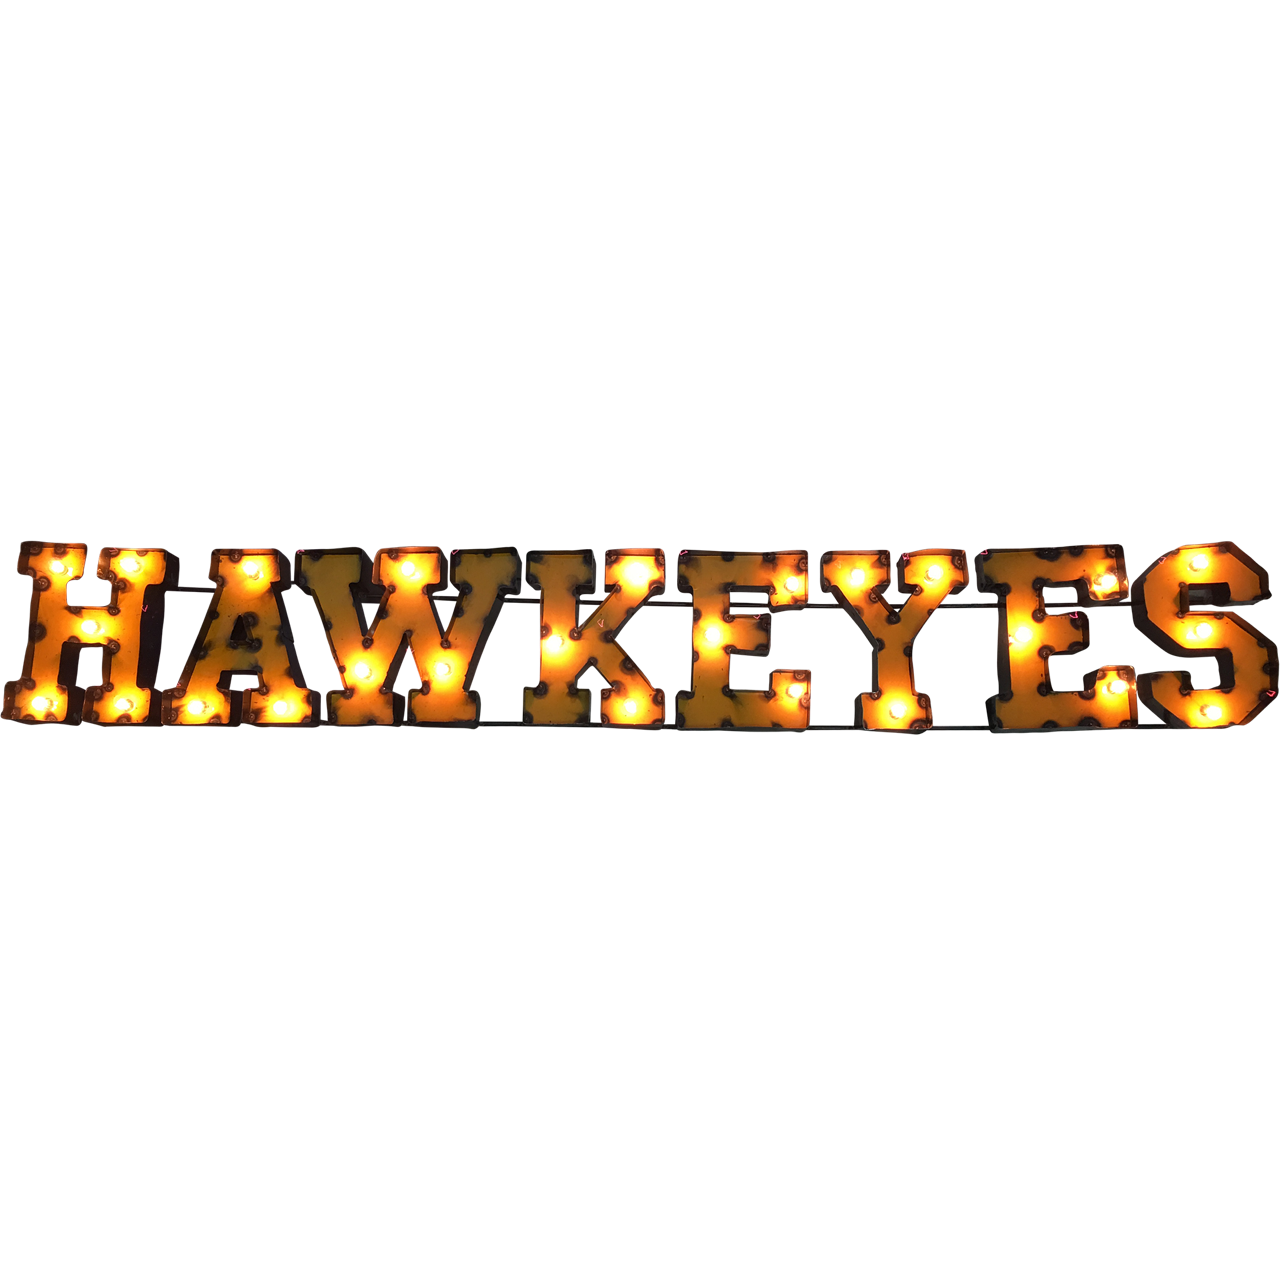 Iowa "Hawkeyes" Lighted Recycled Metal Wall Decor